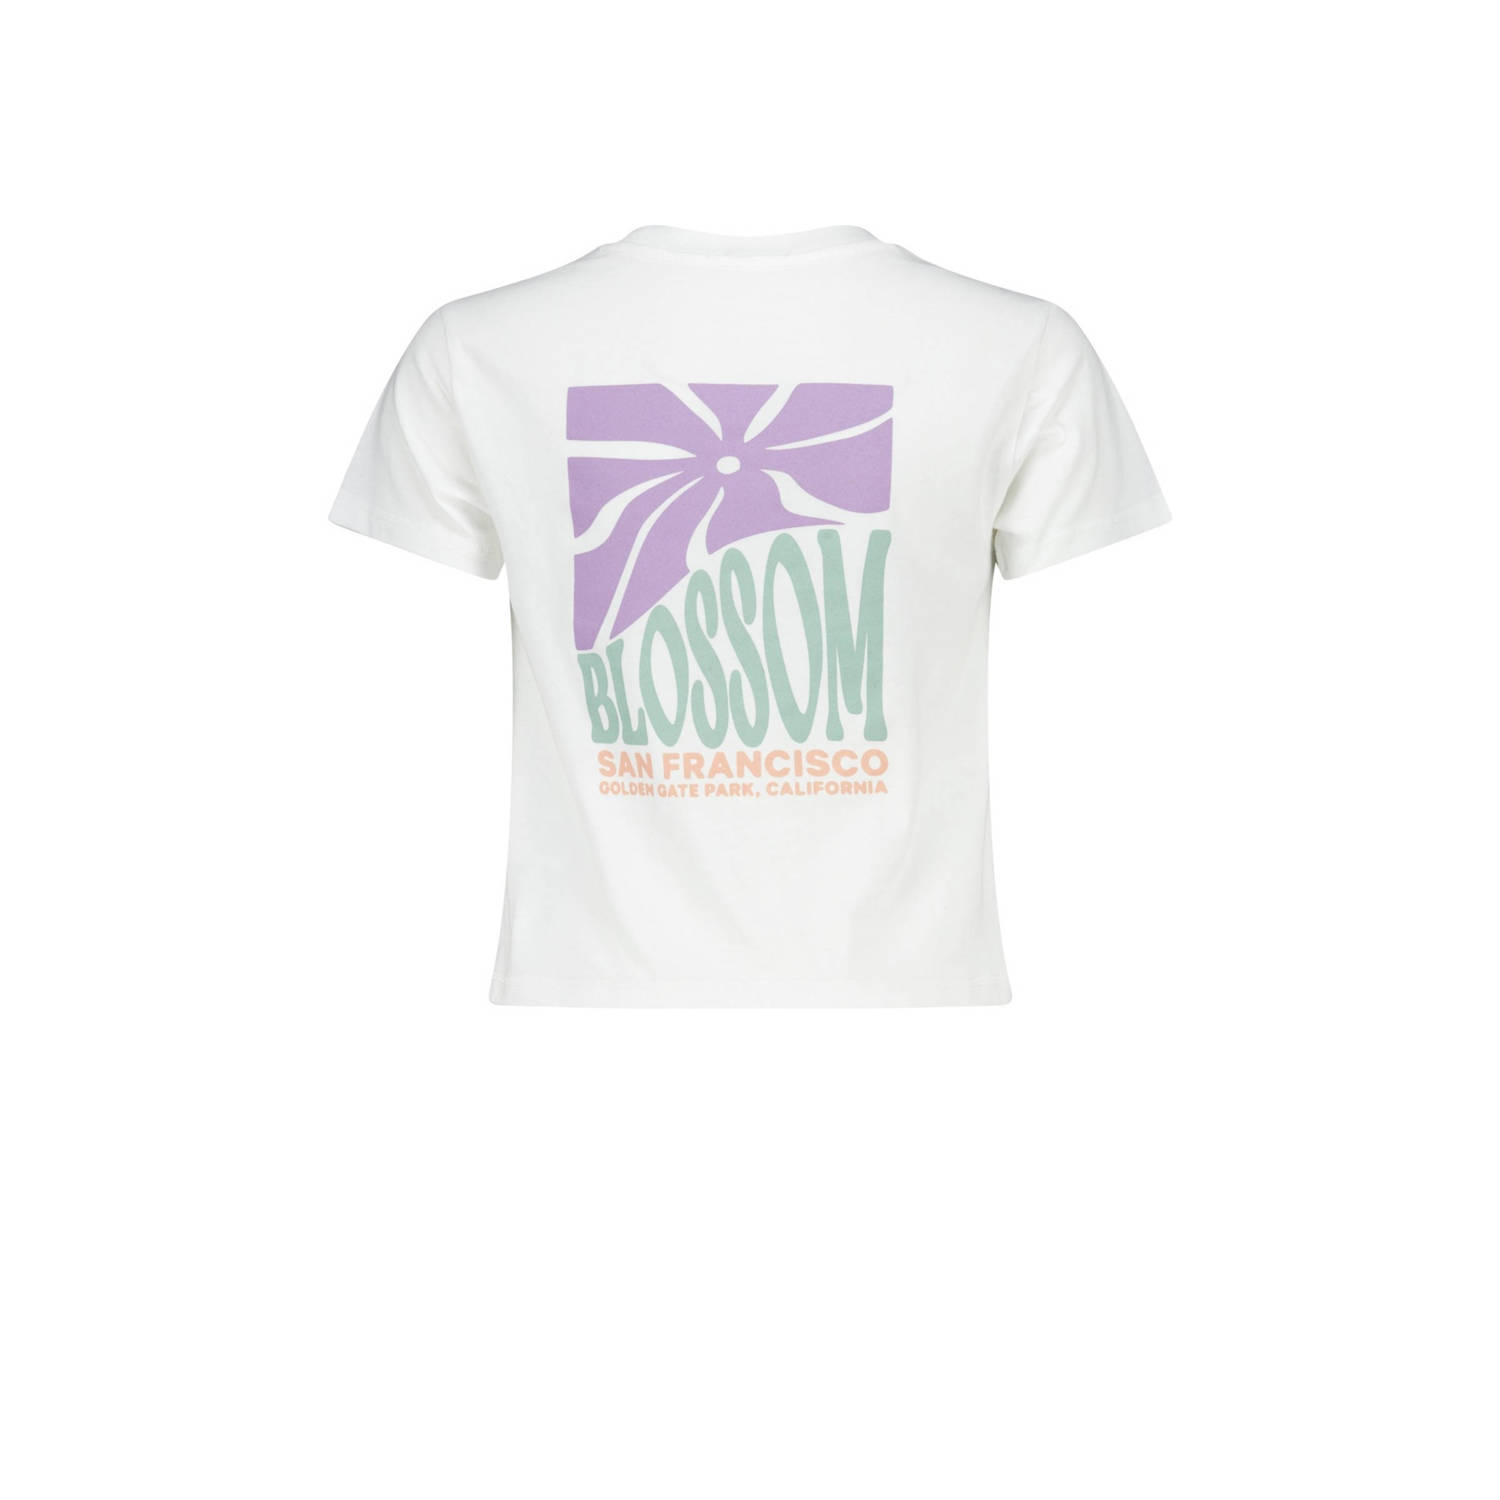 America Today T-shirt Elise met backprint wit lila groen